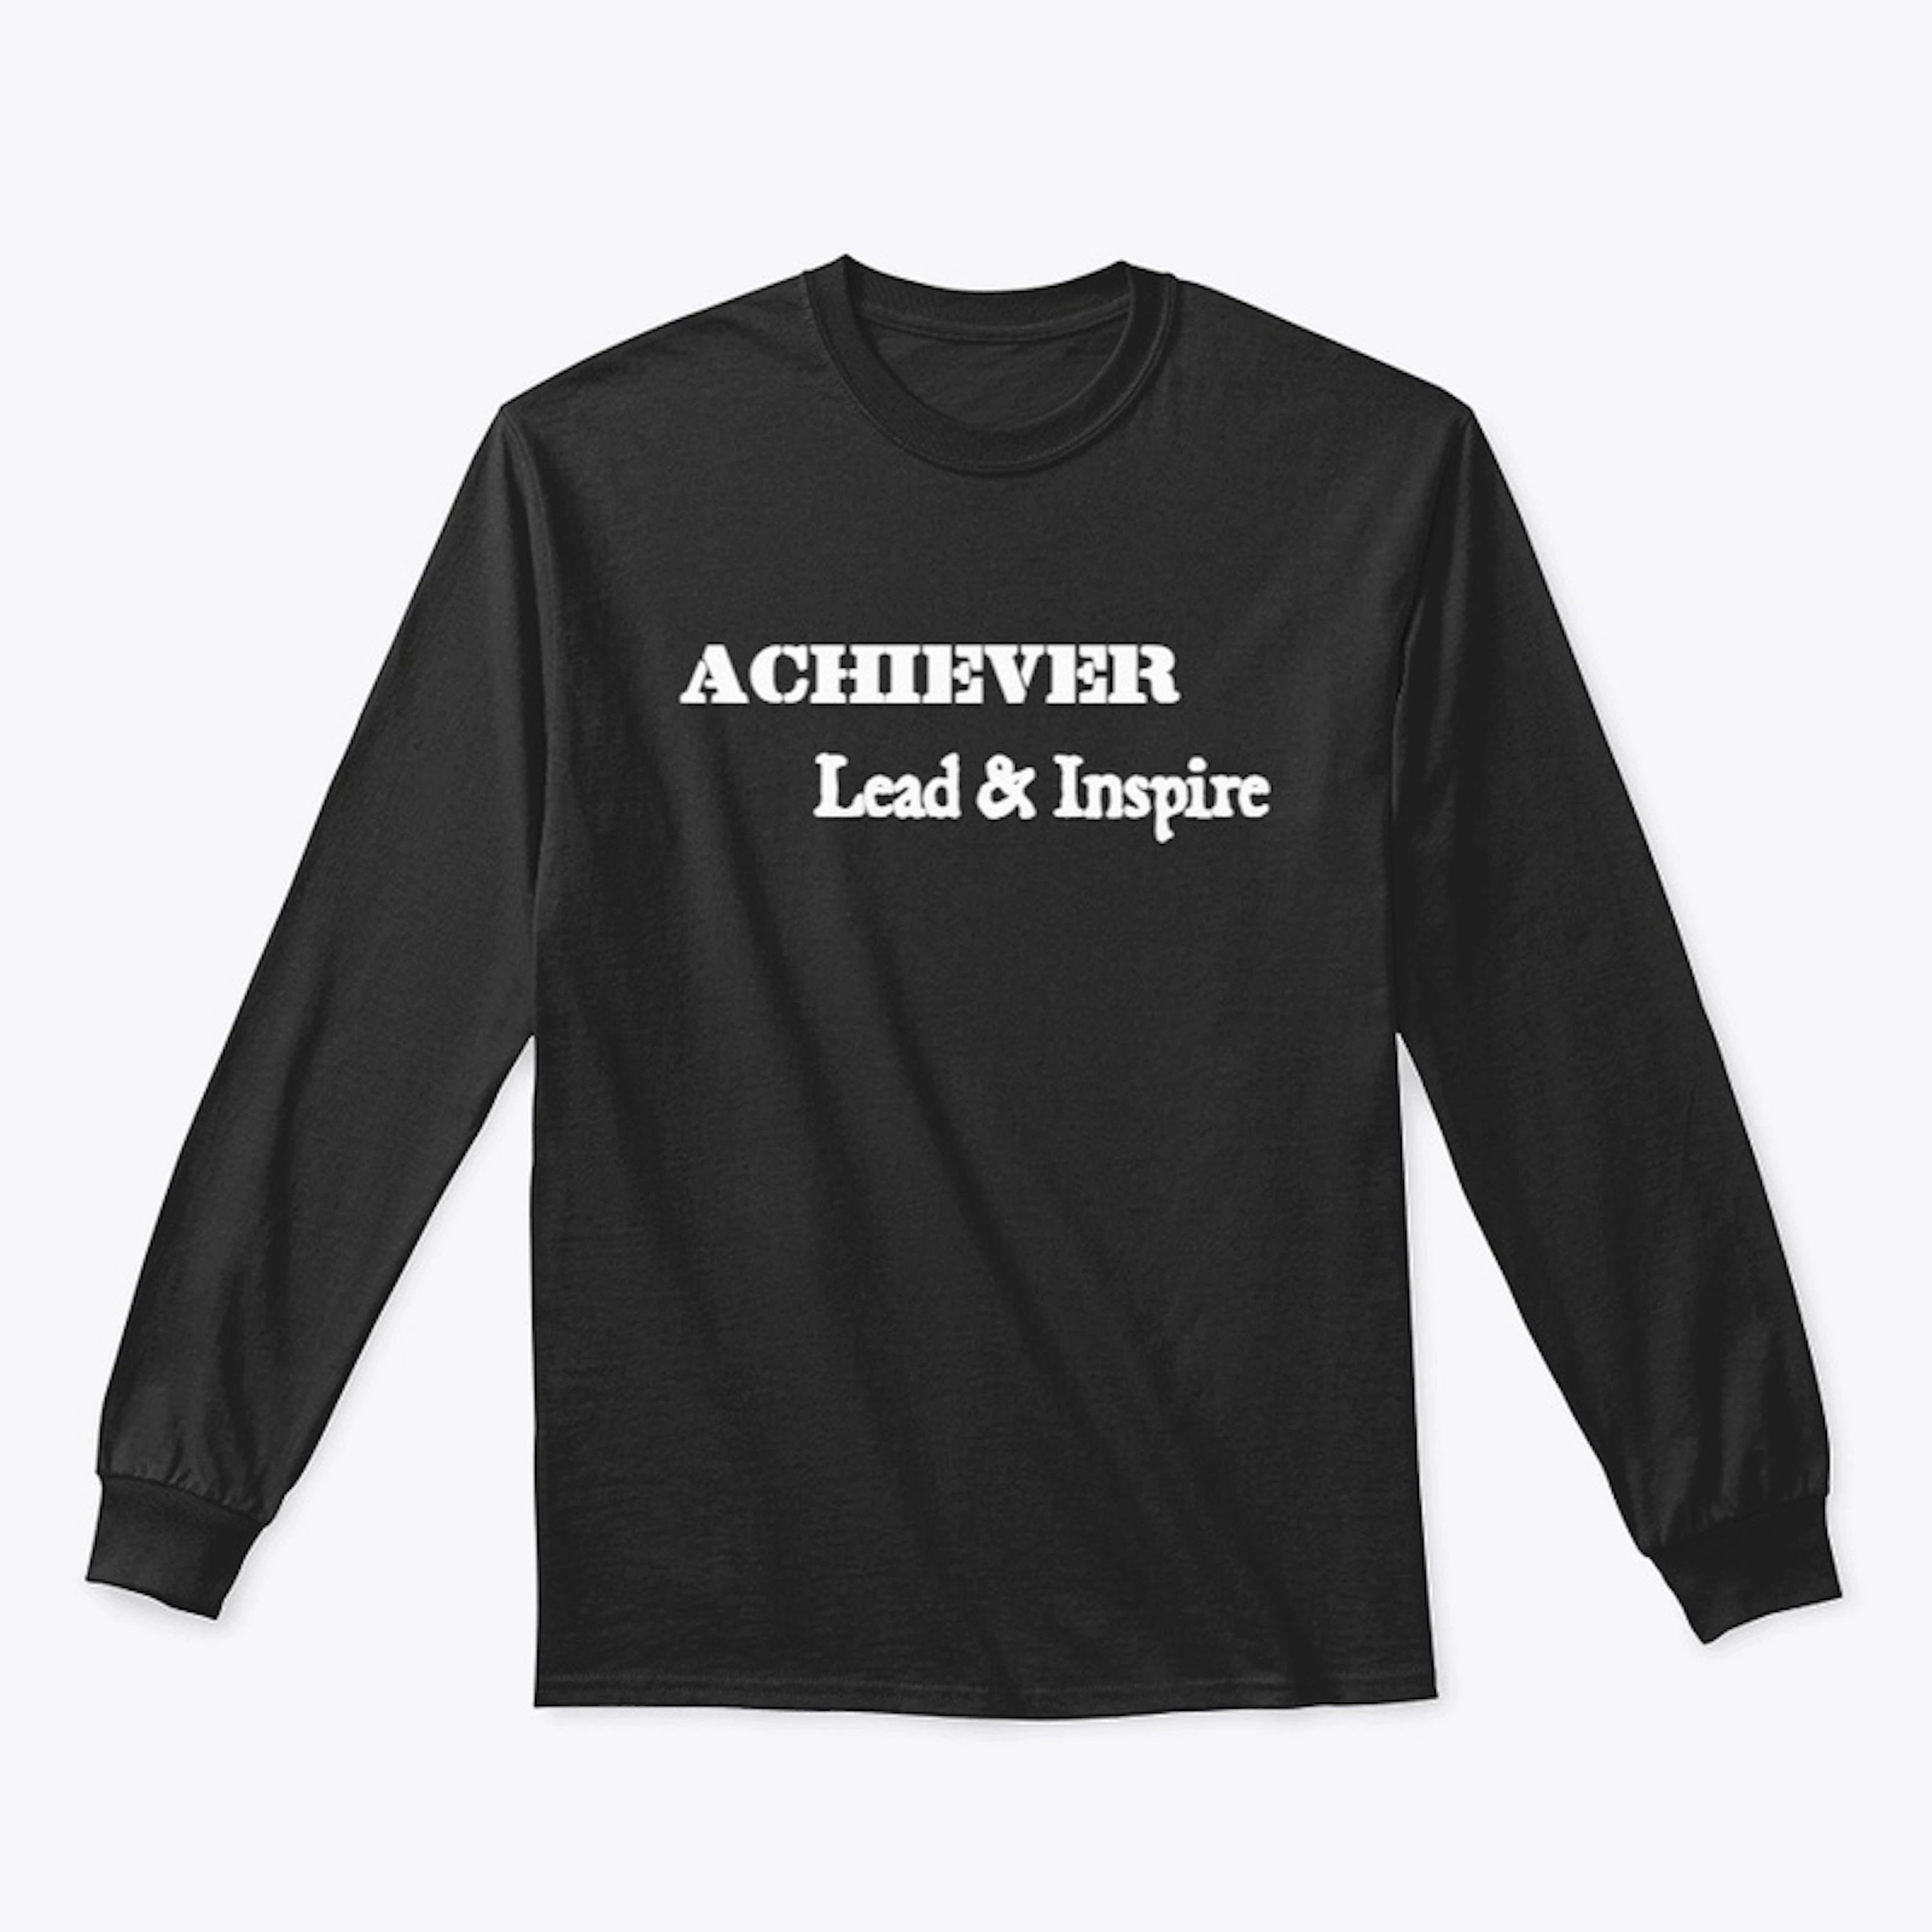 Achiever Lead & Inspire (Black)